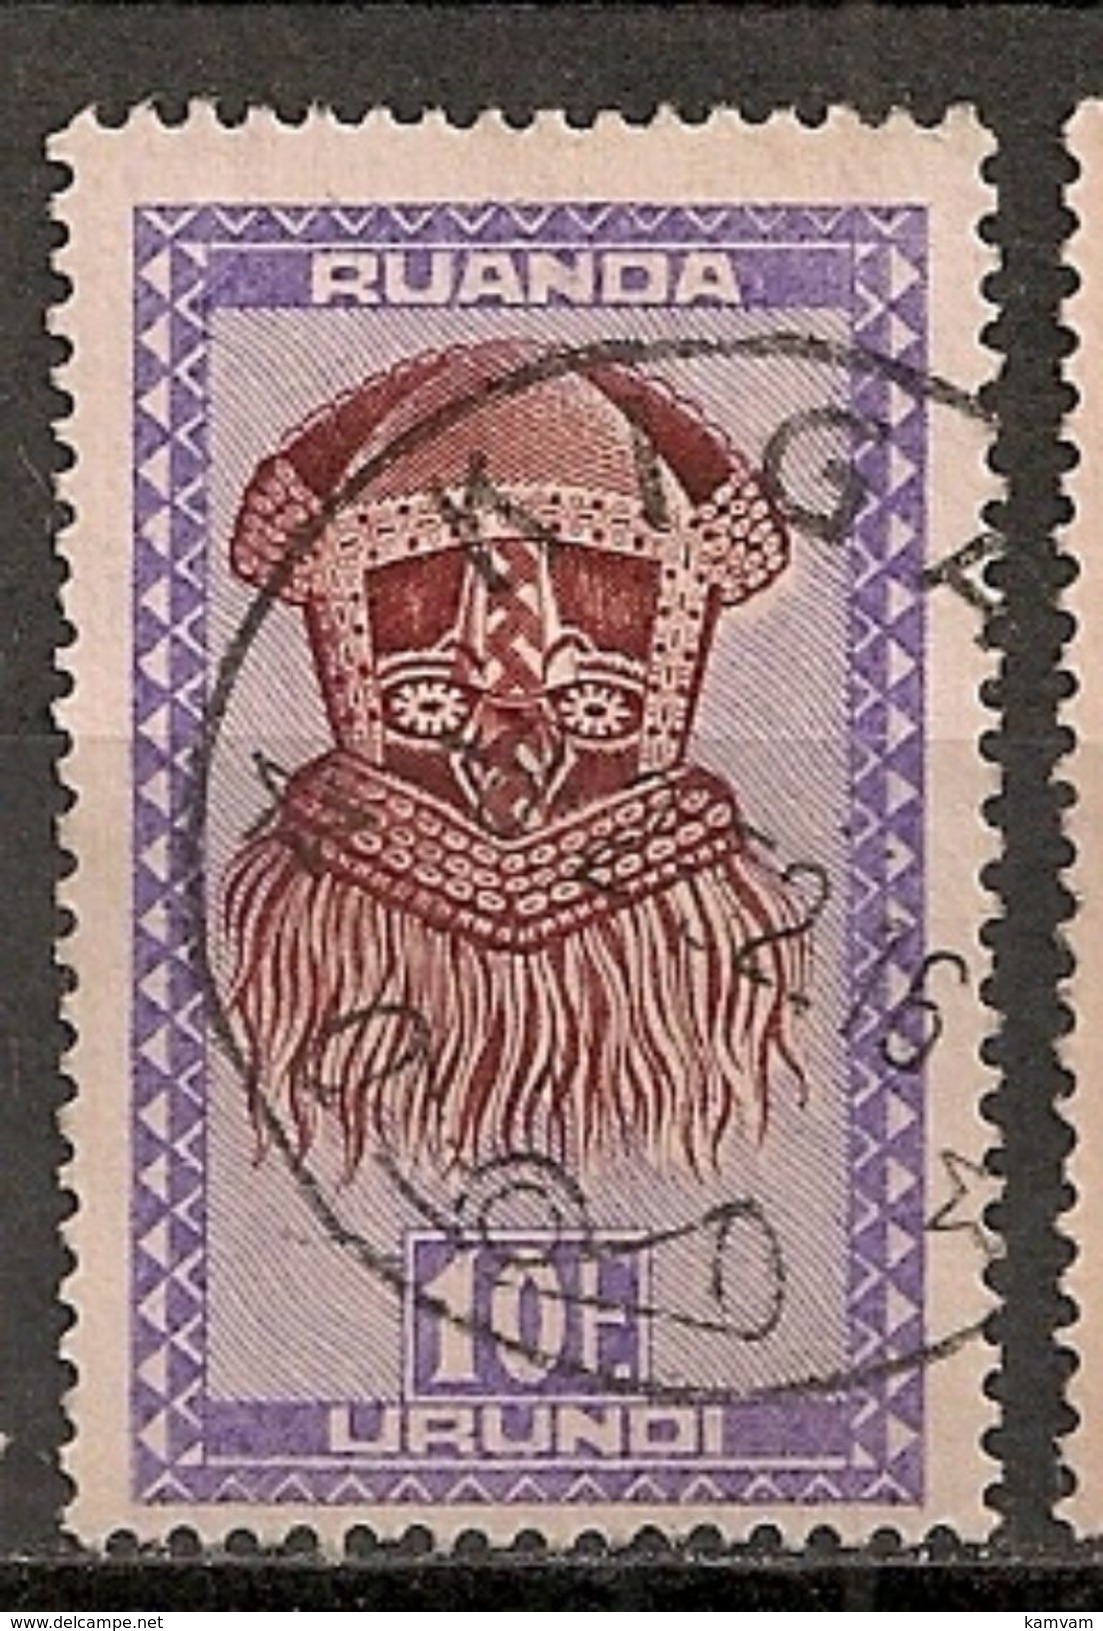 CONGO RUANDA URUNDI 169 KIGALI - Used Stamps